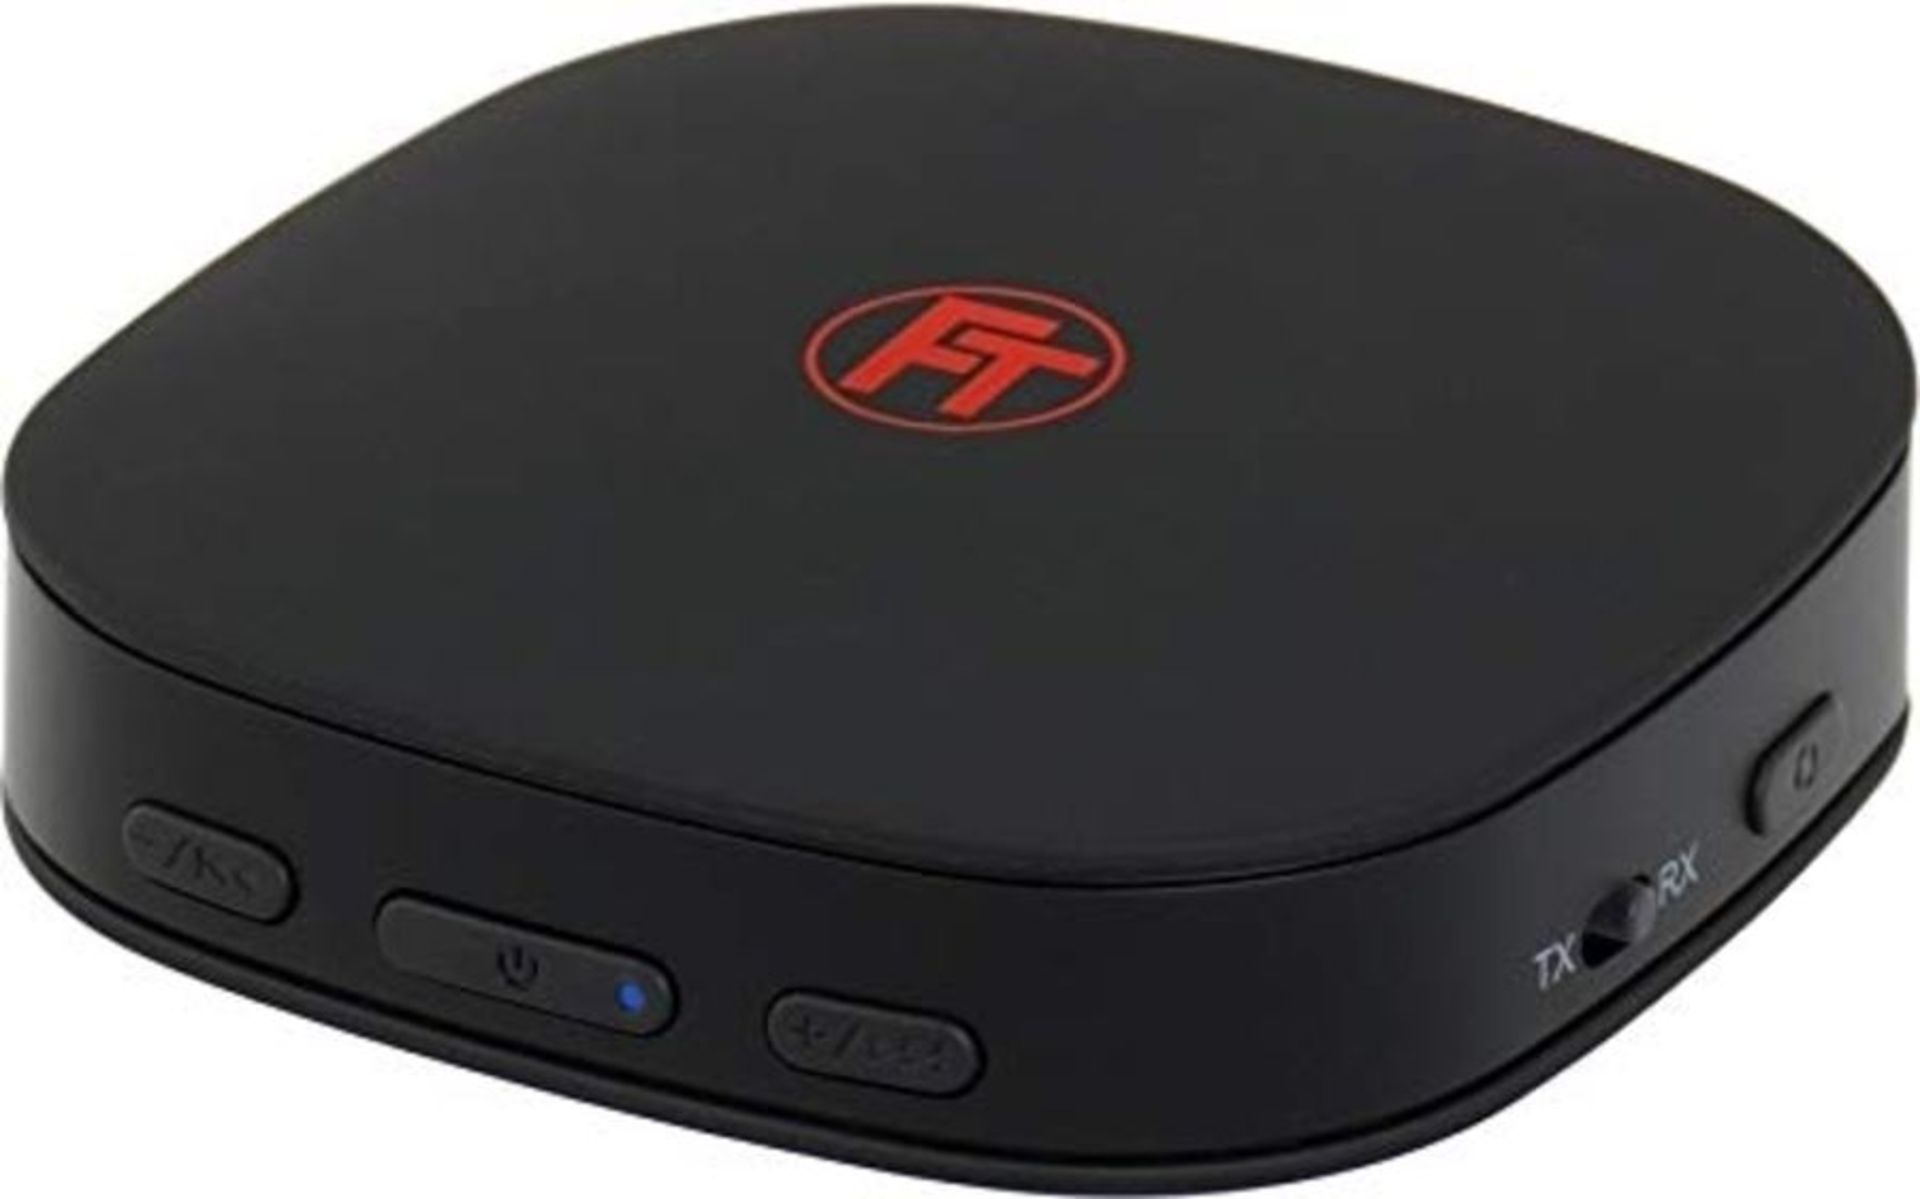 FeinTech Bluetooth 5.0 Audio Transmitter for TV Adapter Receiver aptX HD Low Latency T